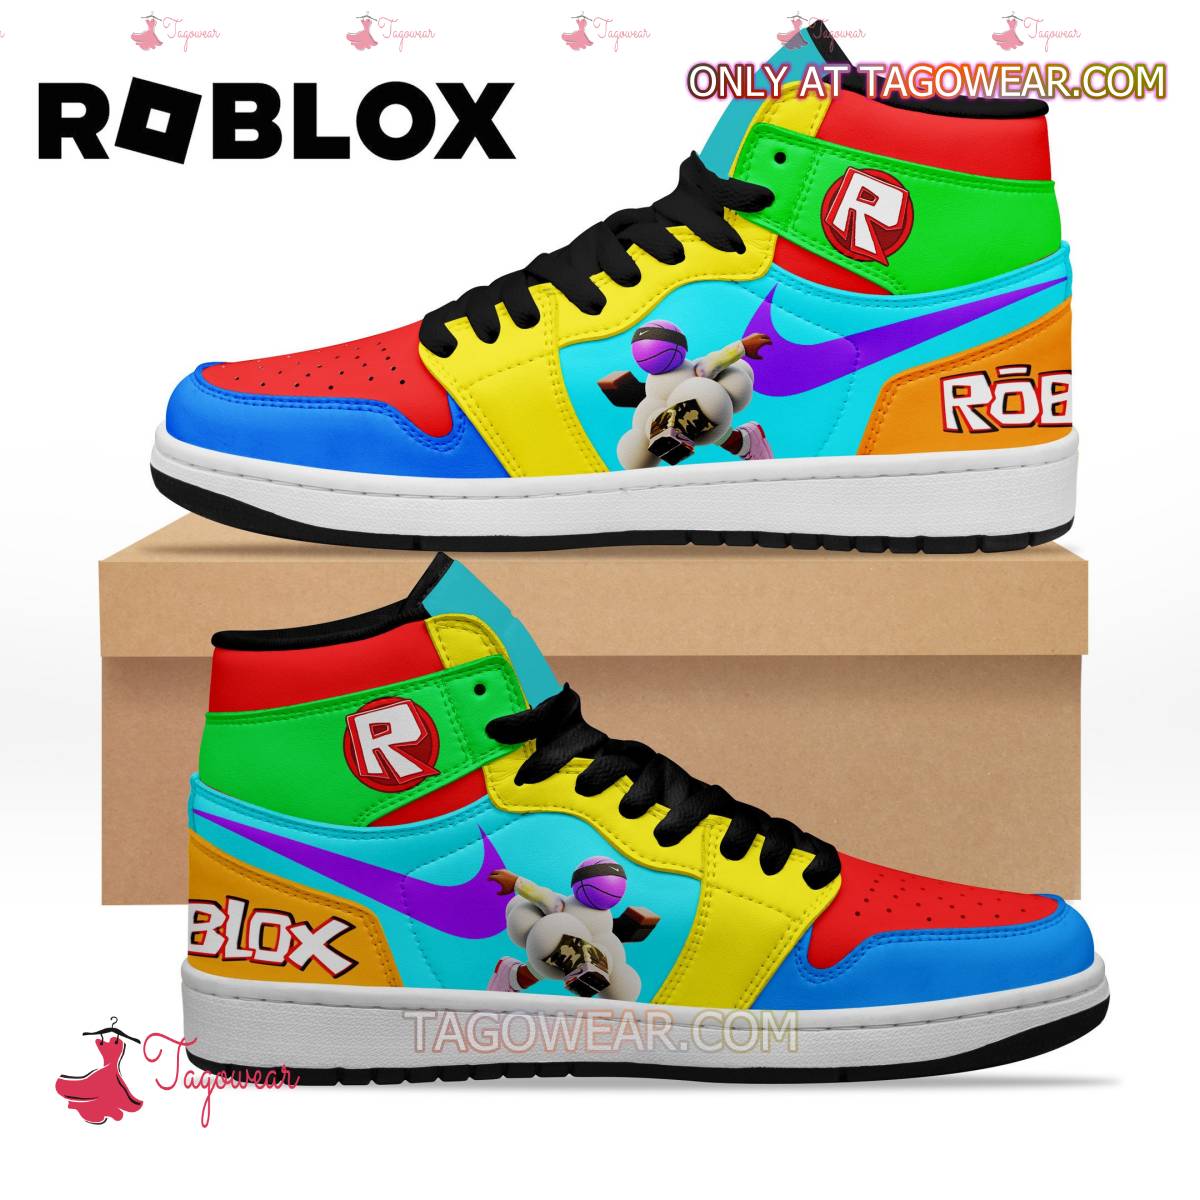 Roblox Game Air Jordan High Top Shoes